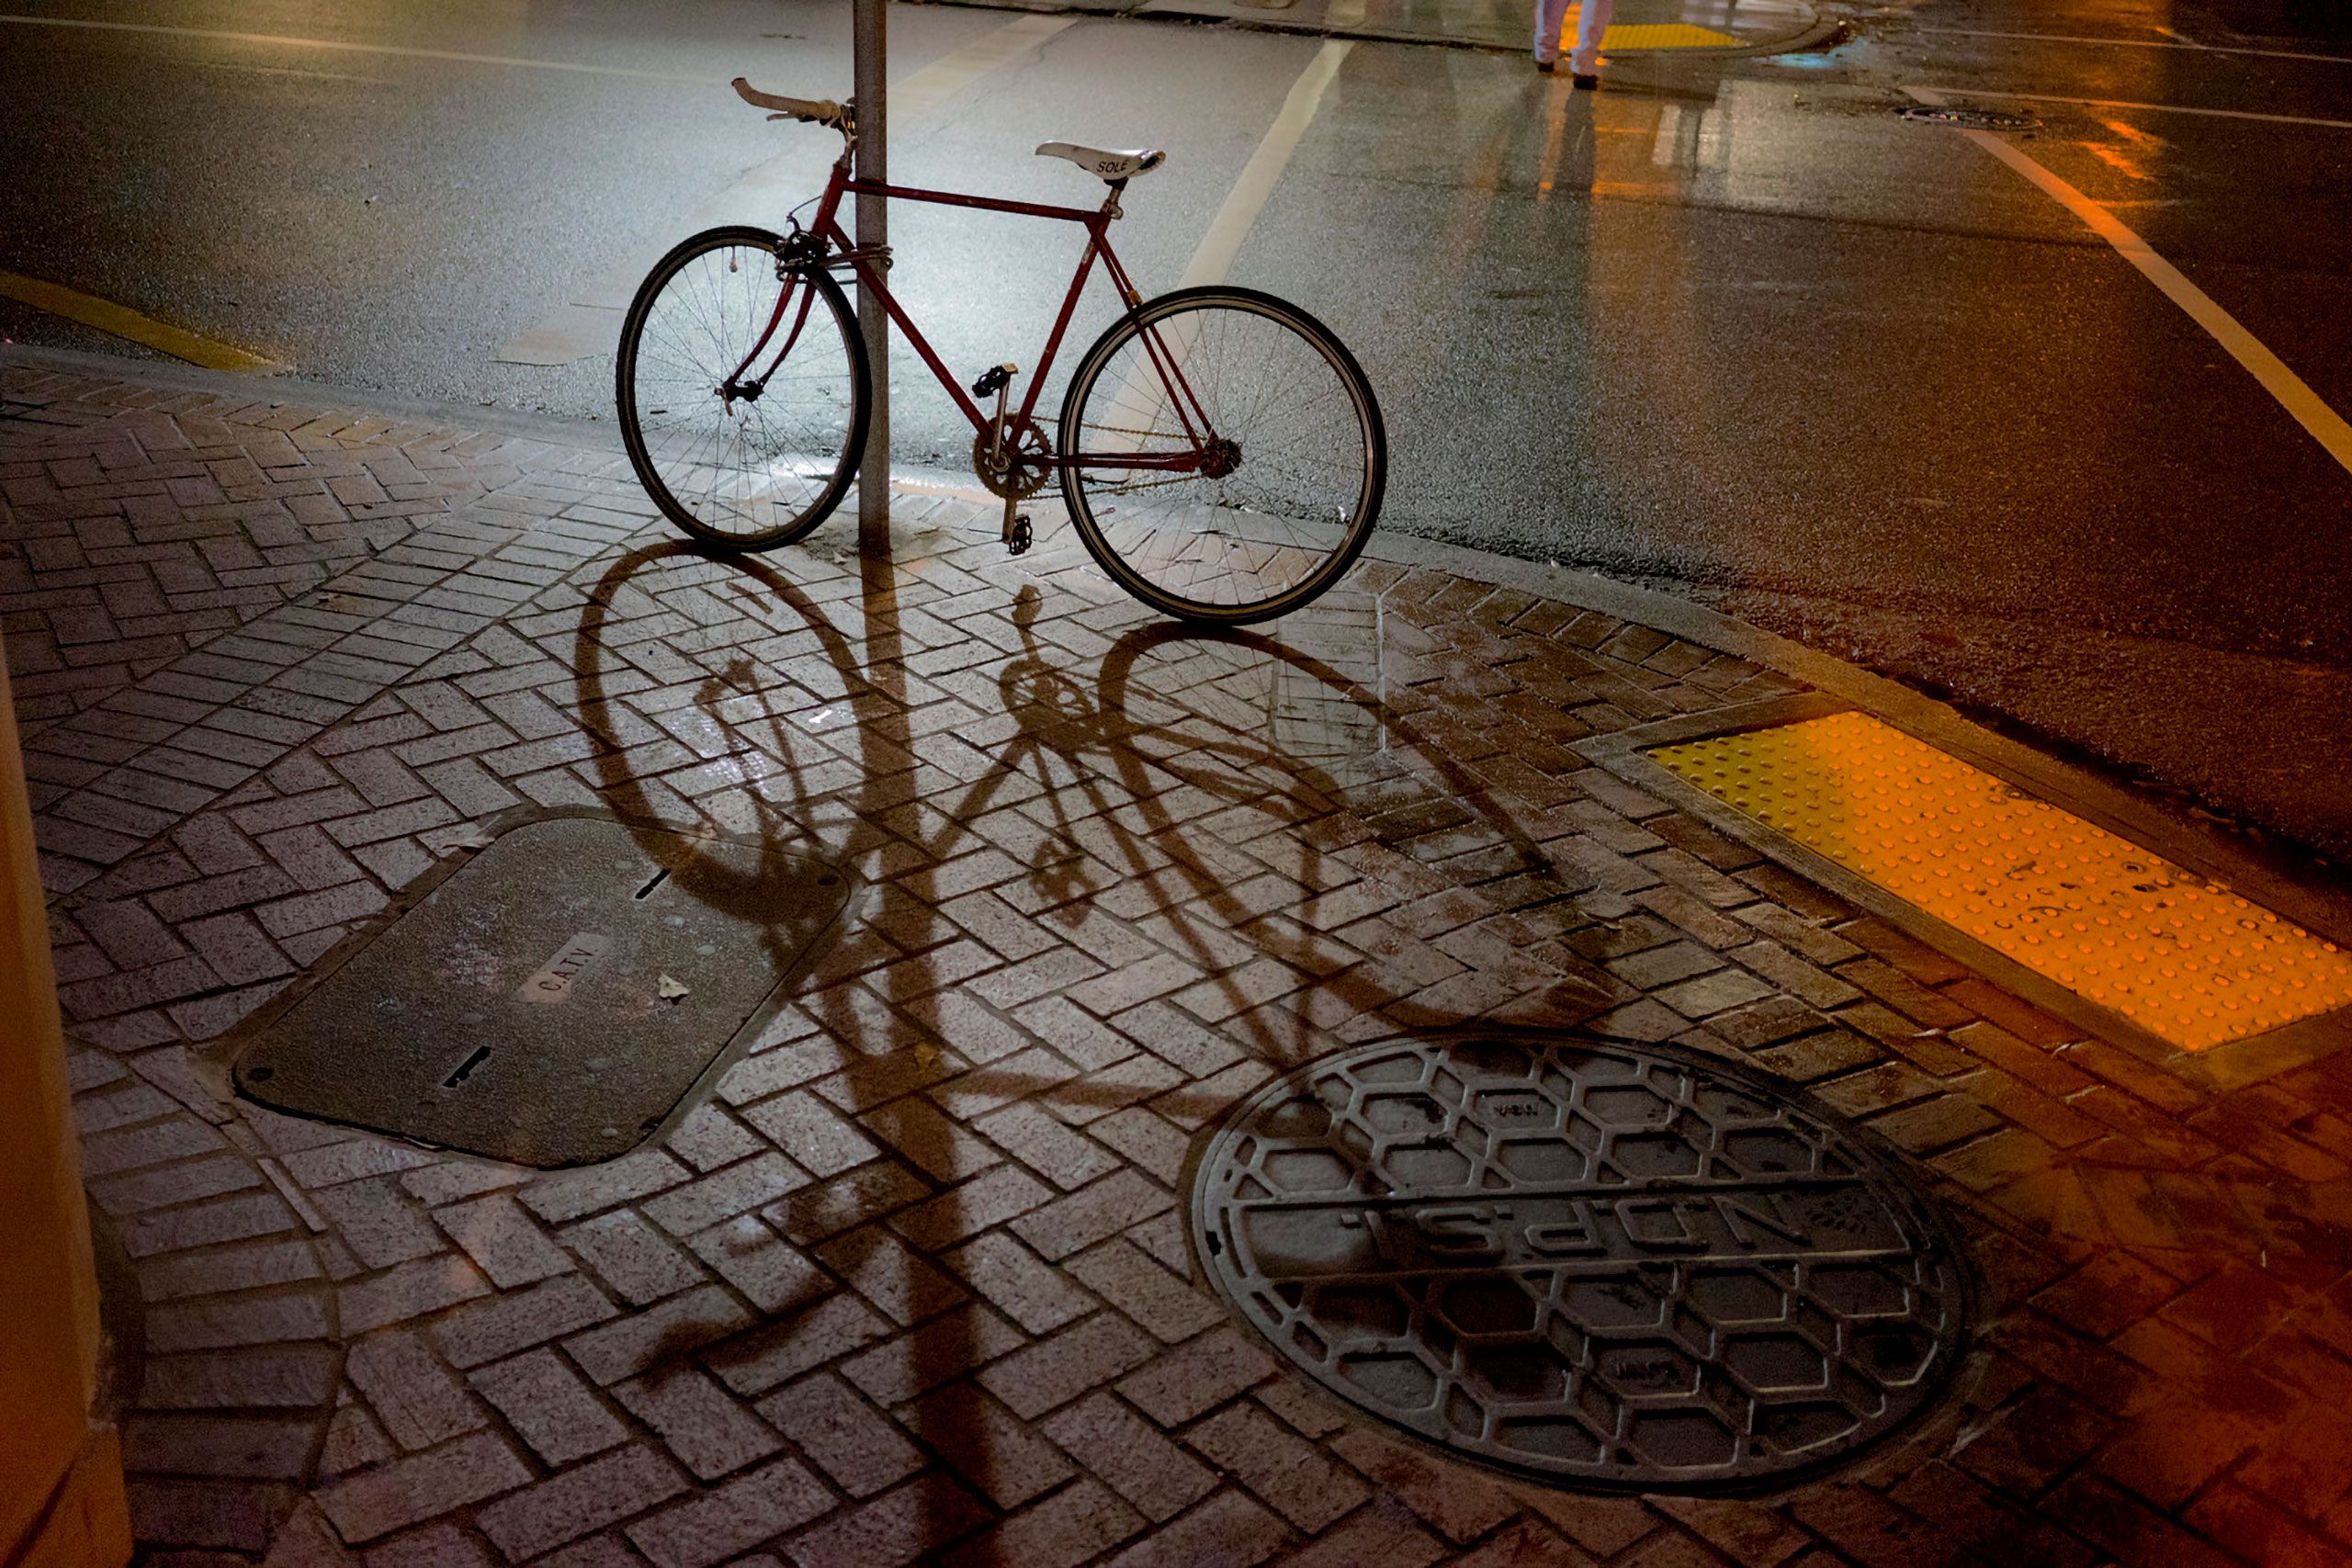 Bike in night New Orleans Louisiana NOLA chatropolis street by Resuruant august